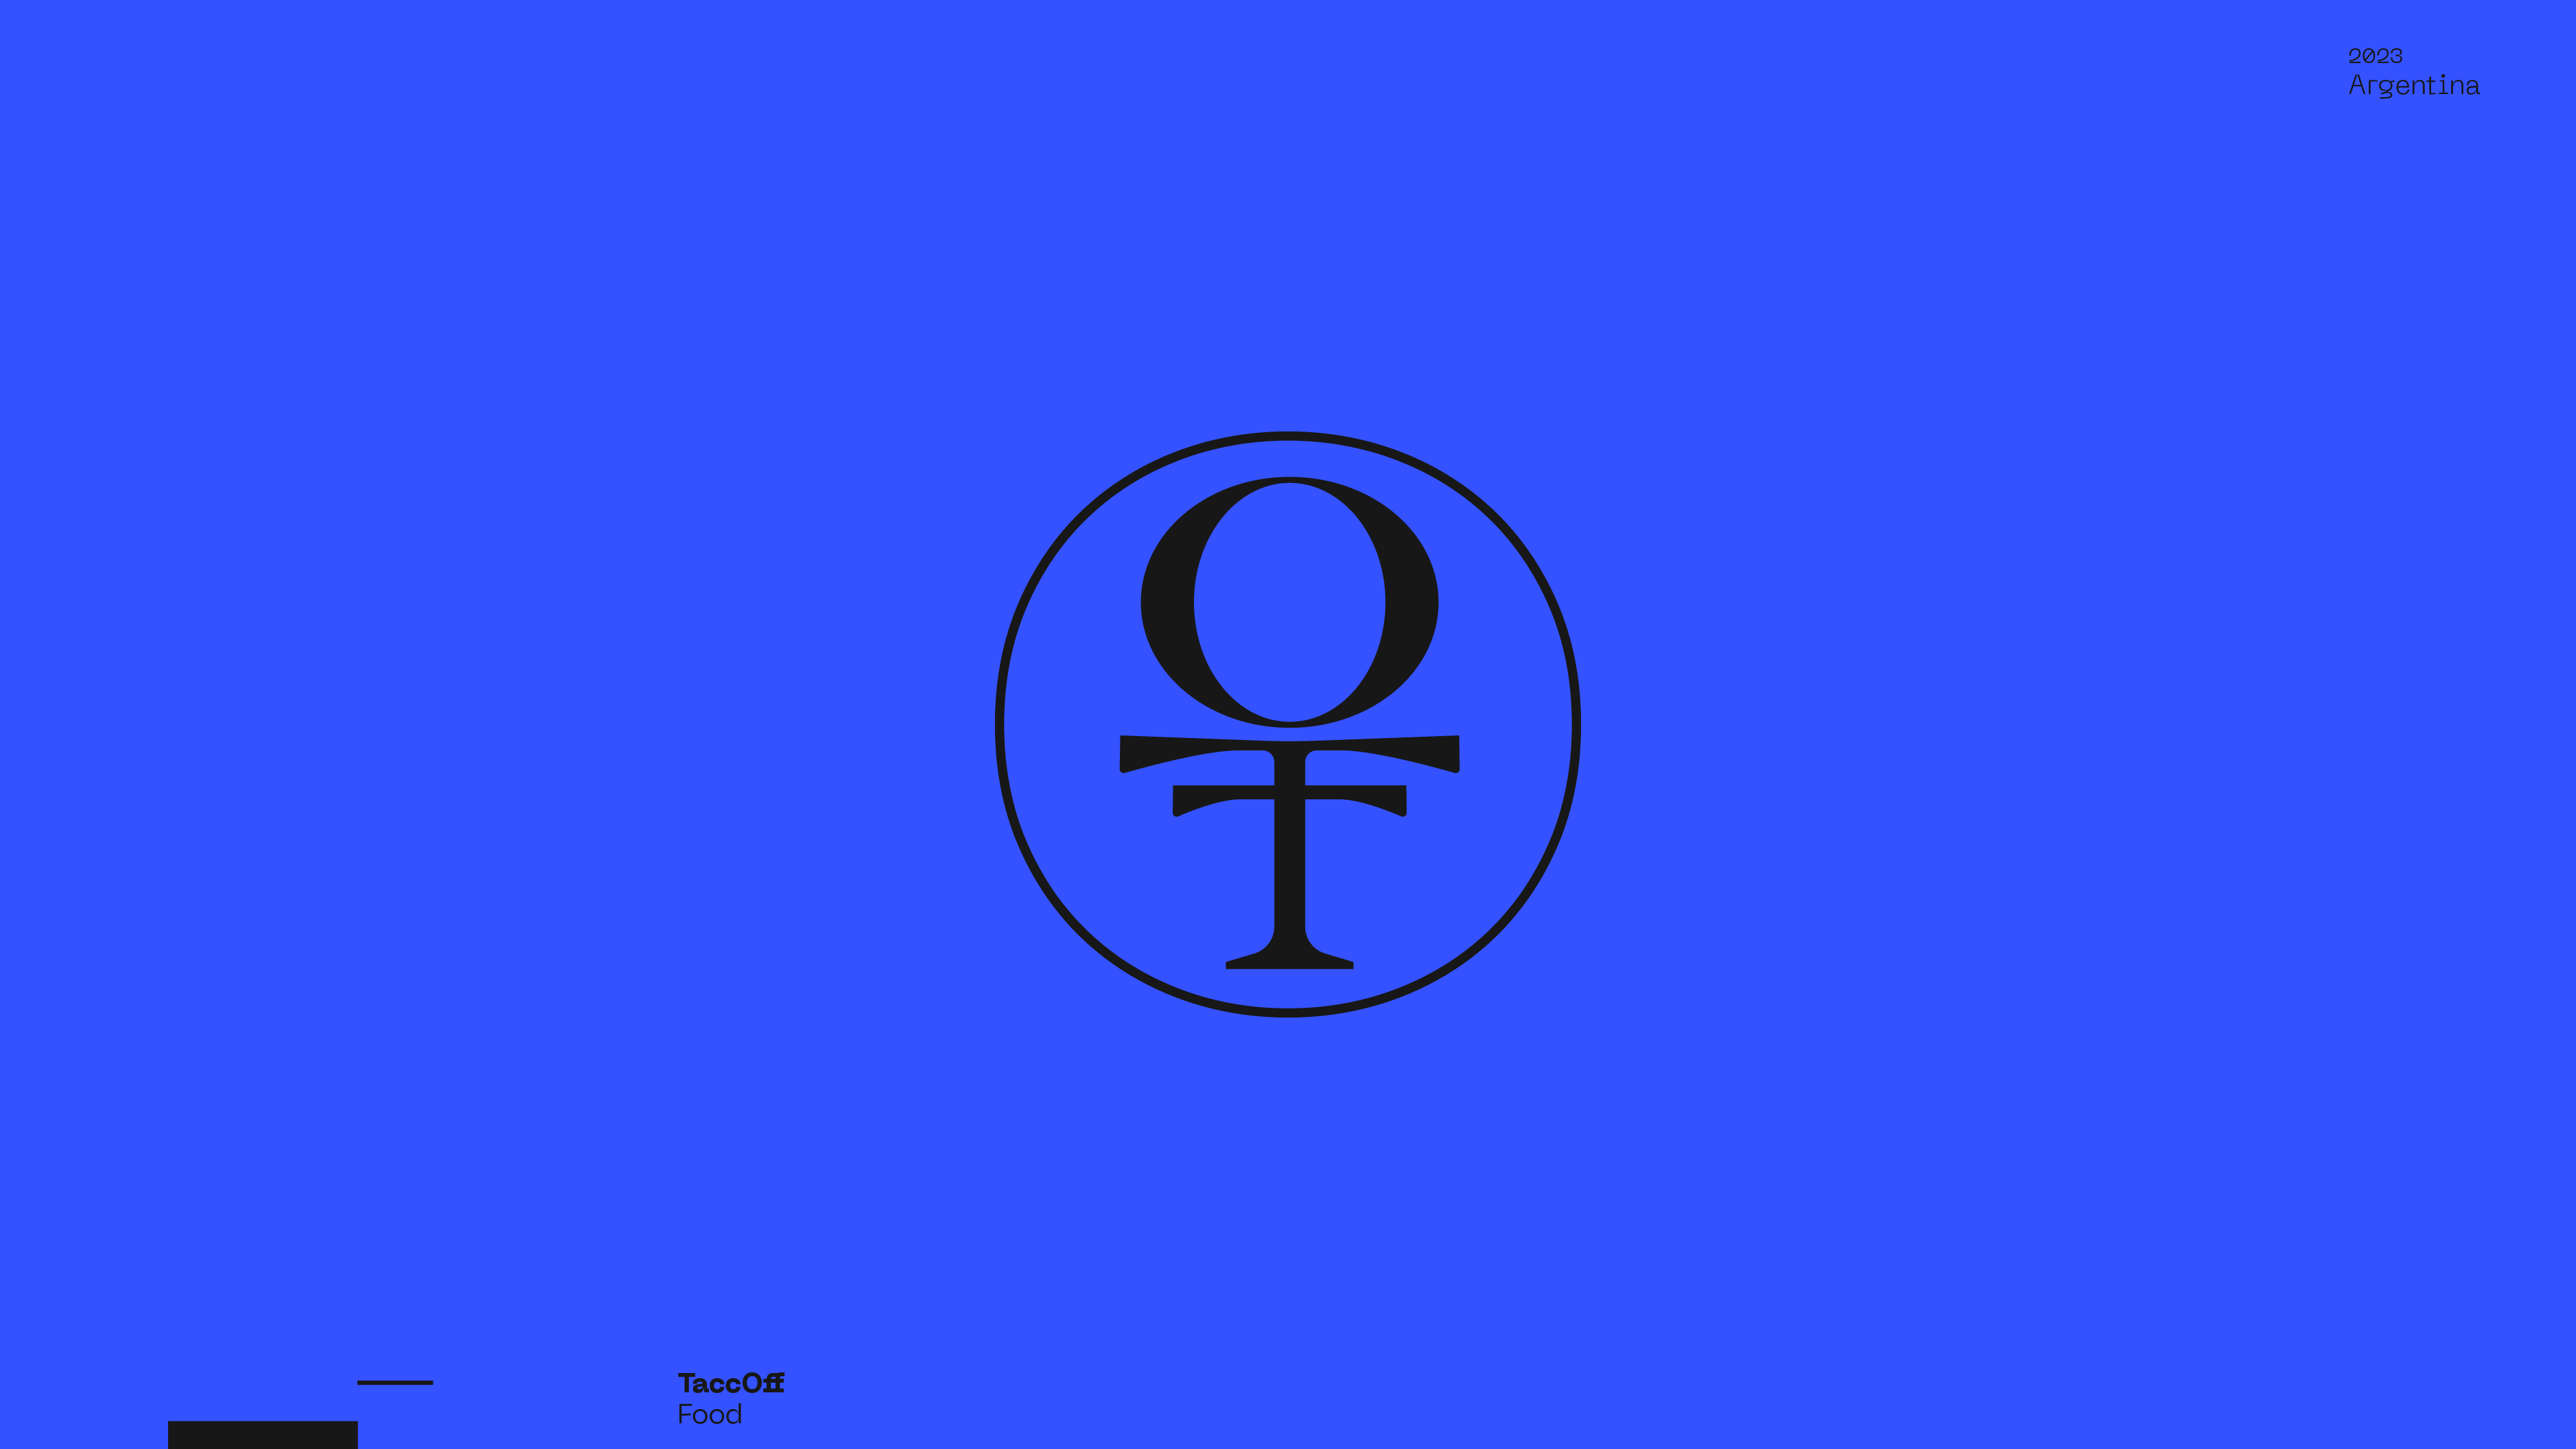 Guapo Design Studio by Esteban Ibarra Logofolio 2023 logo designer — TaccOff